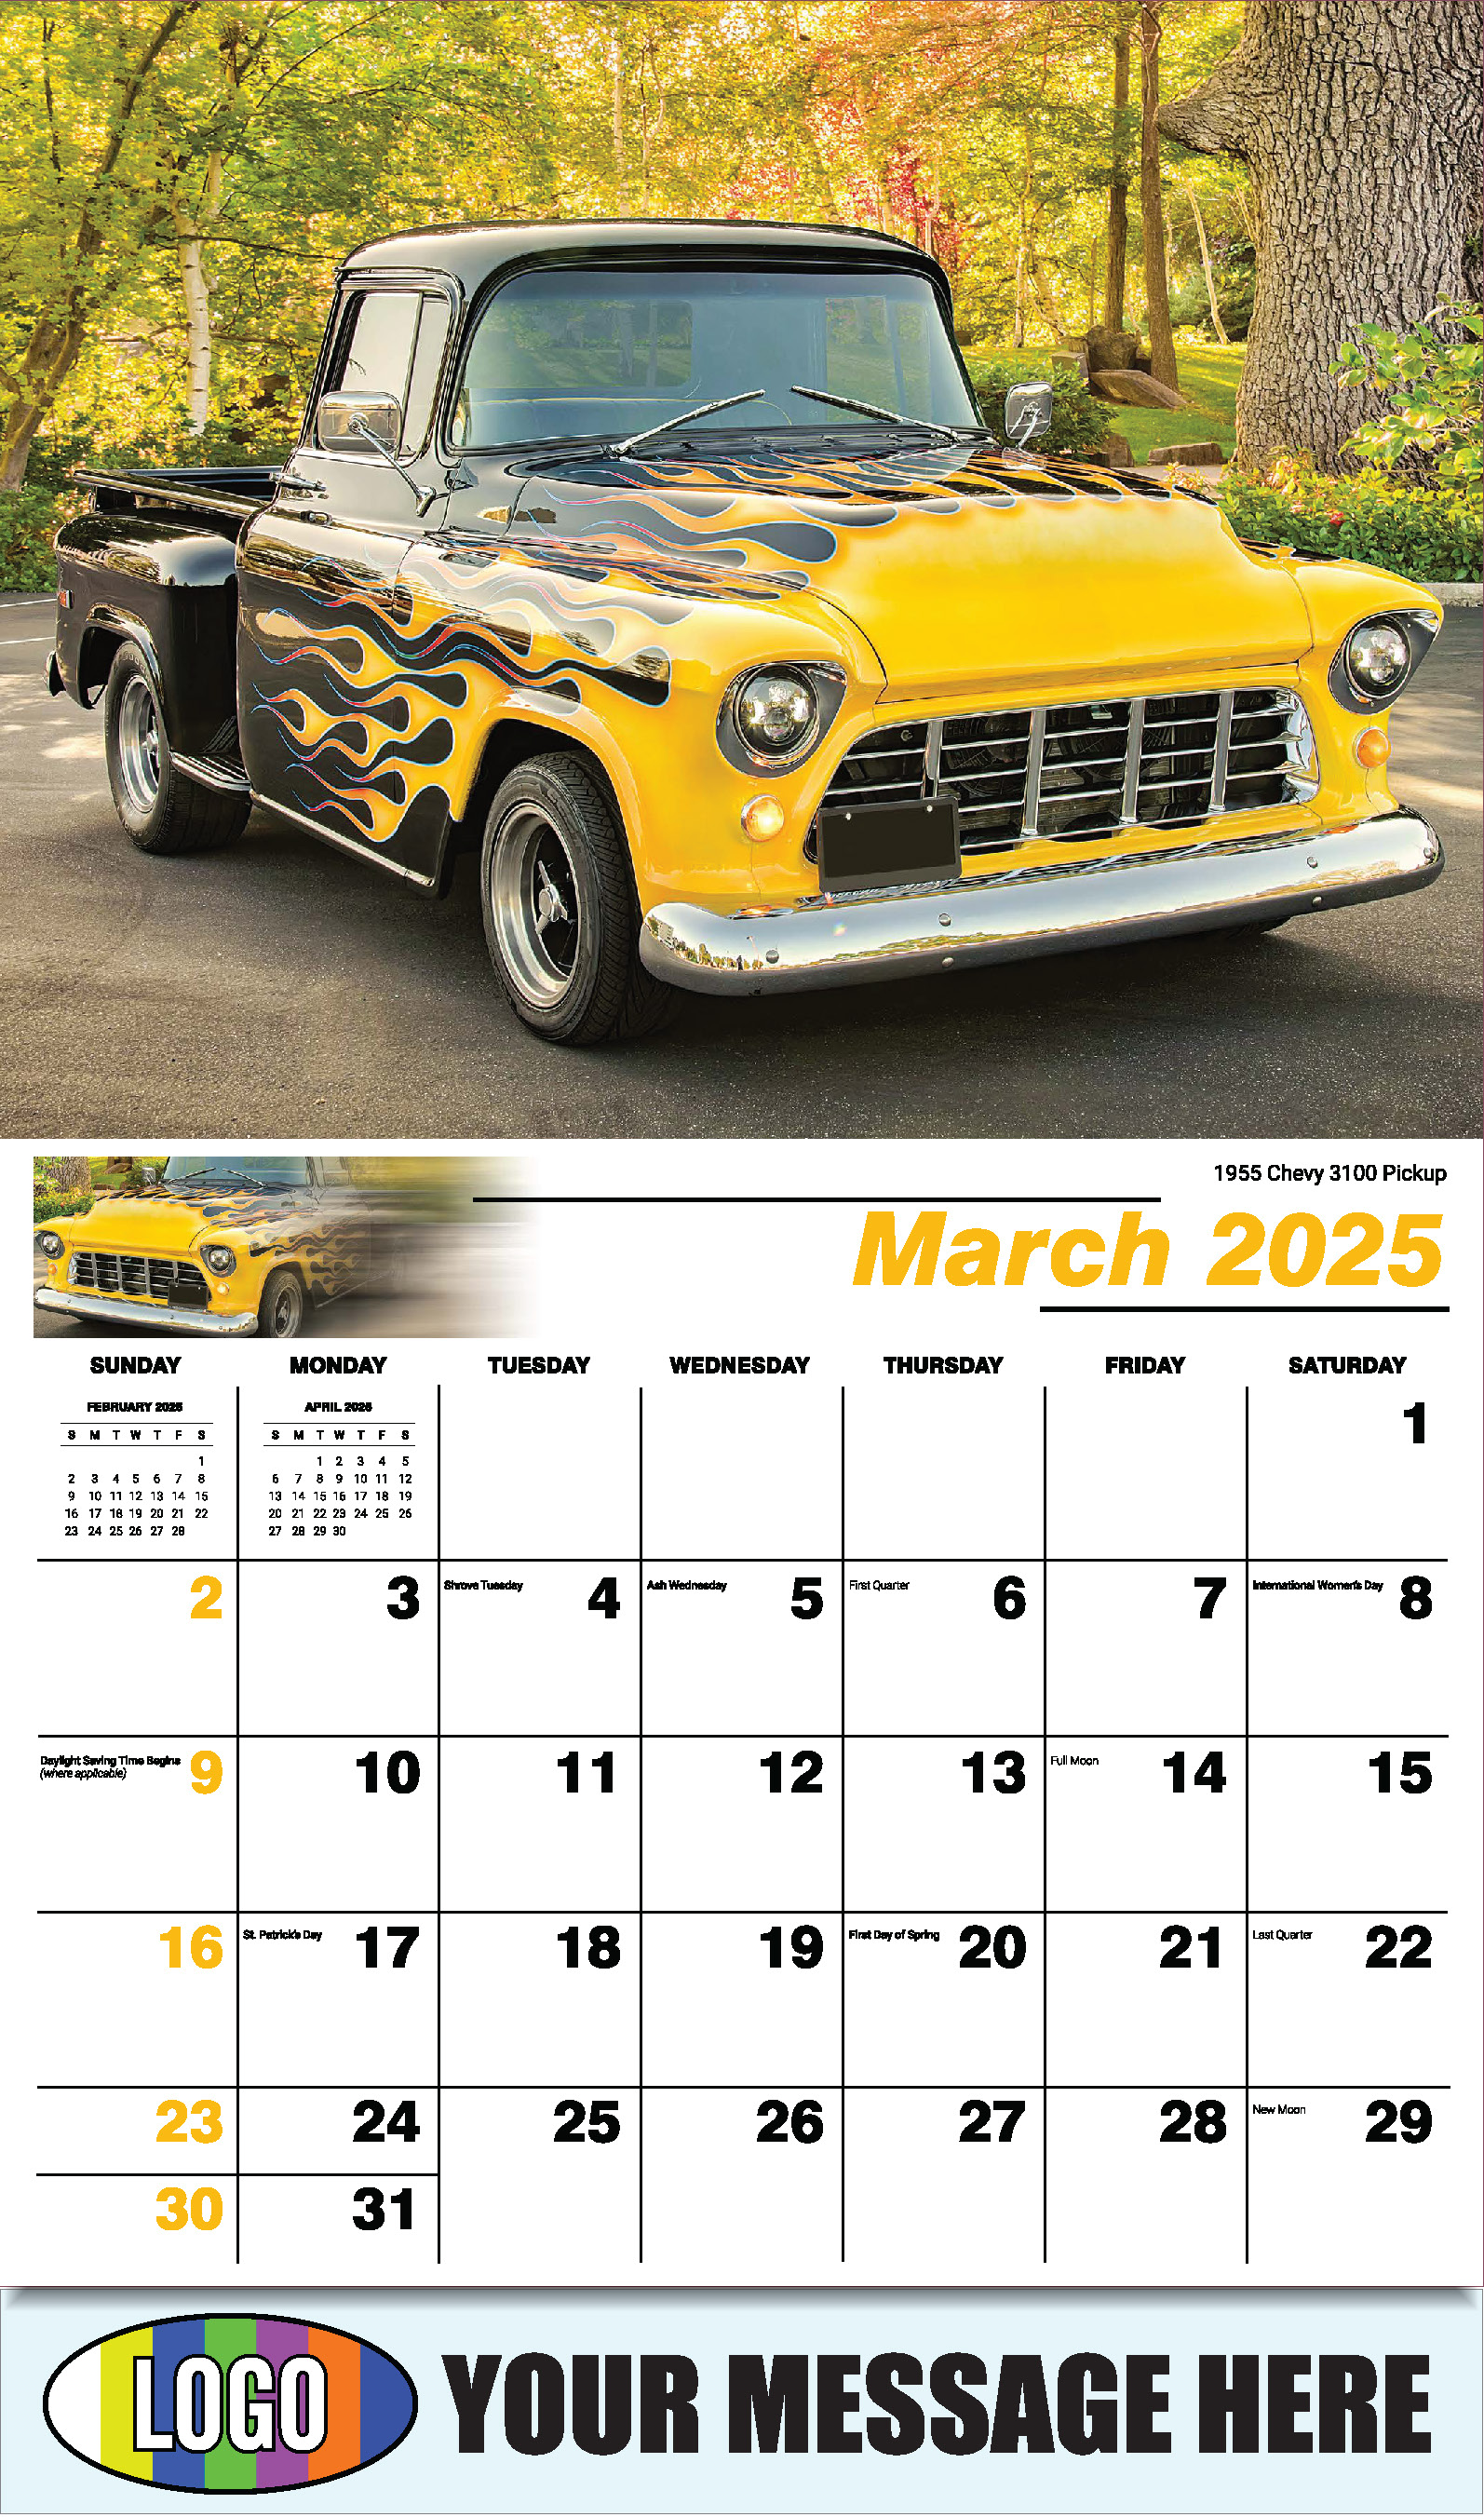 Pumped-Up Pickups 2025 Automotive Business Promo Calendar - March